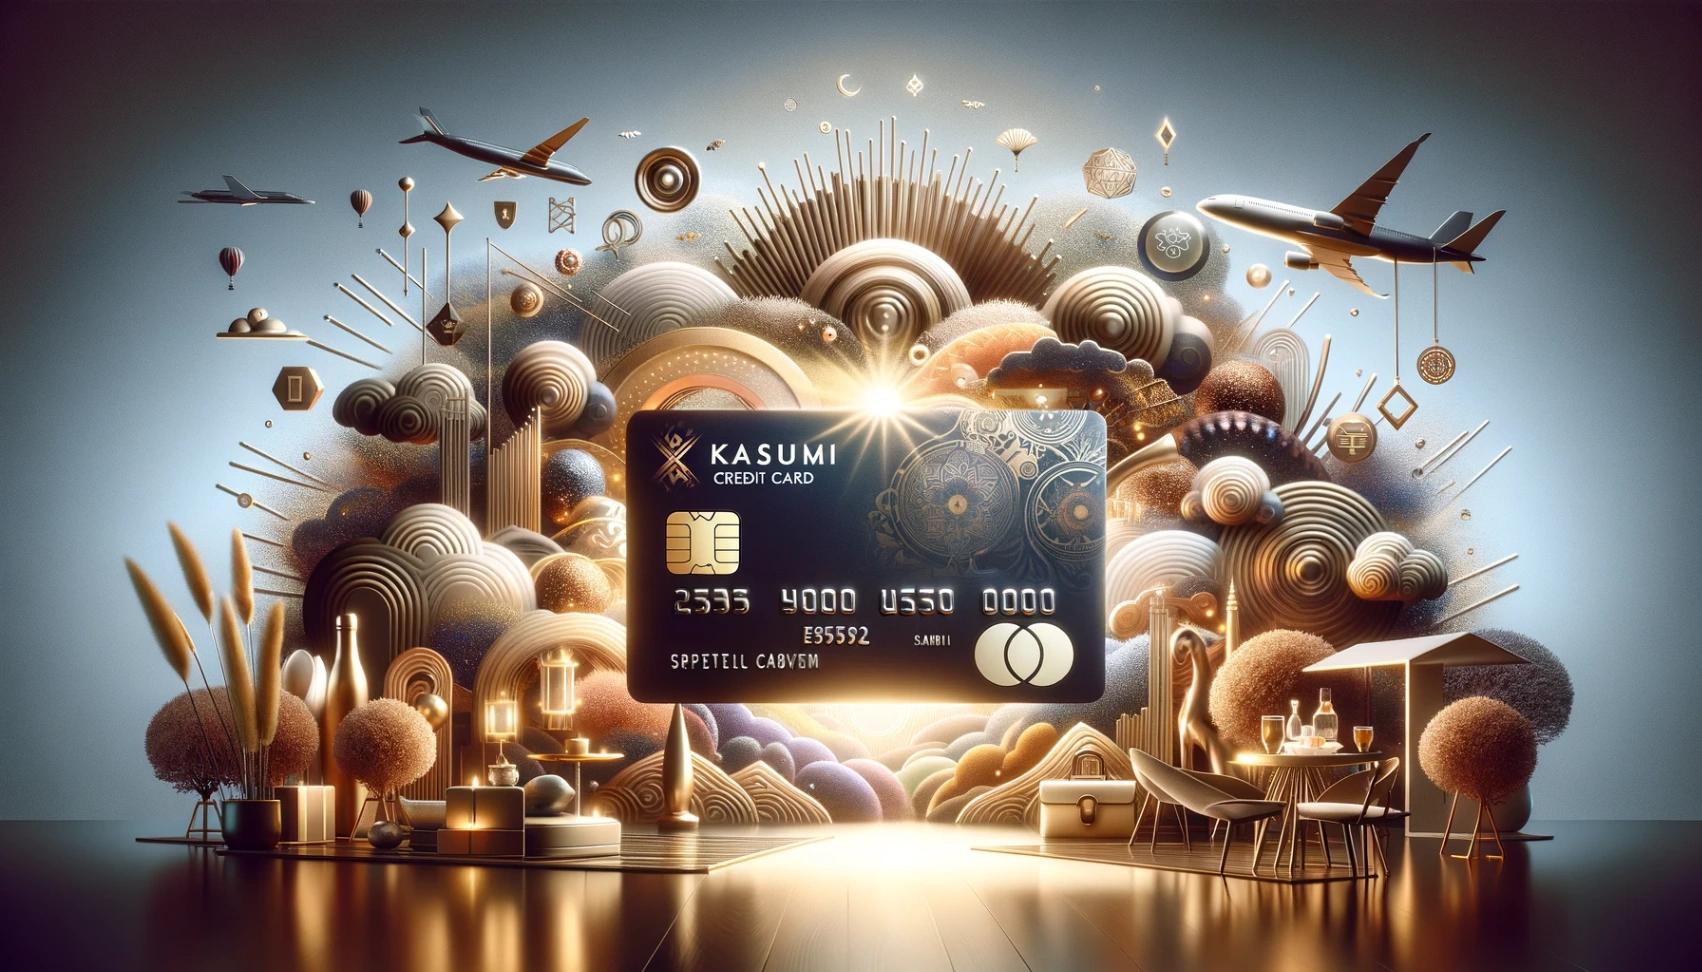 KASUMI クレジットカード - オンライン申し込みの手順ガイド